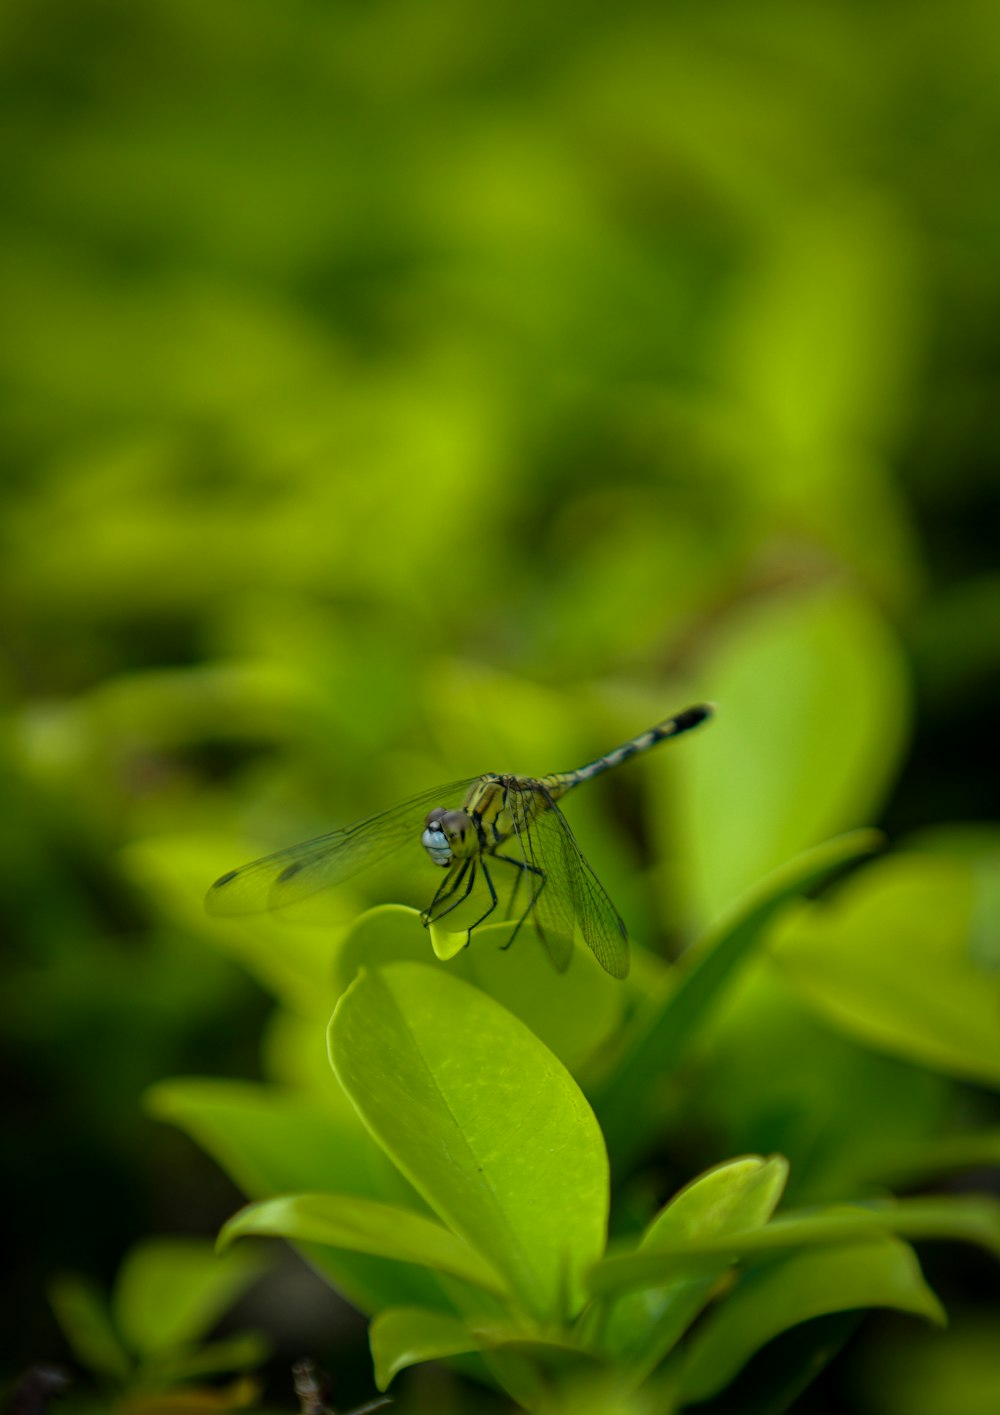 a dragon flys over a leafy green plant